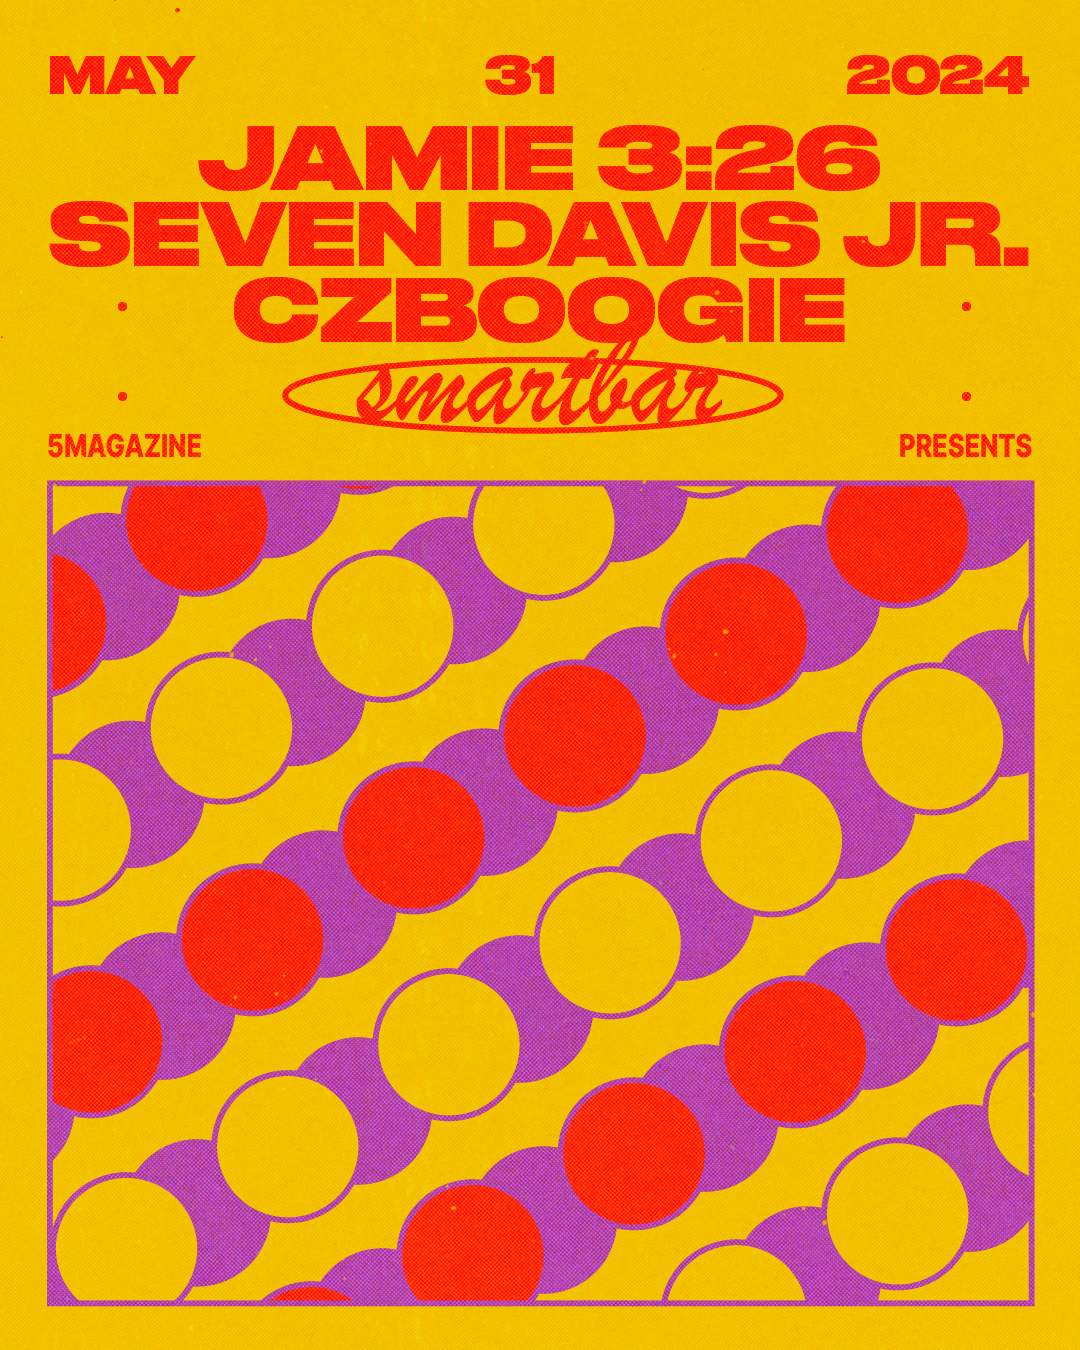 5 Magazine presents Jamie 3:26 - Seven Davis Jr. - Czboogie - フライヤー表